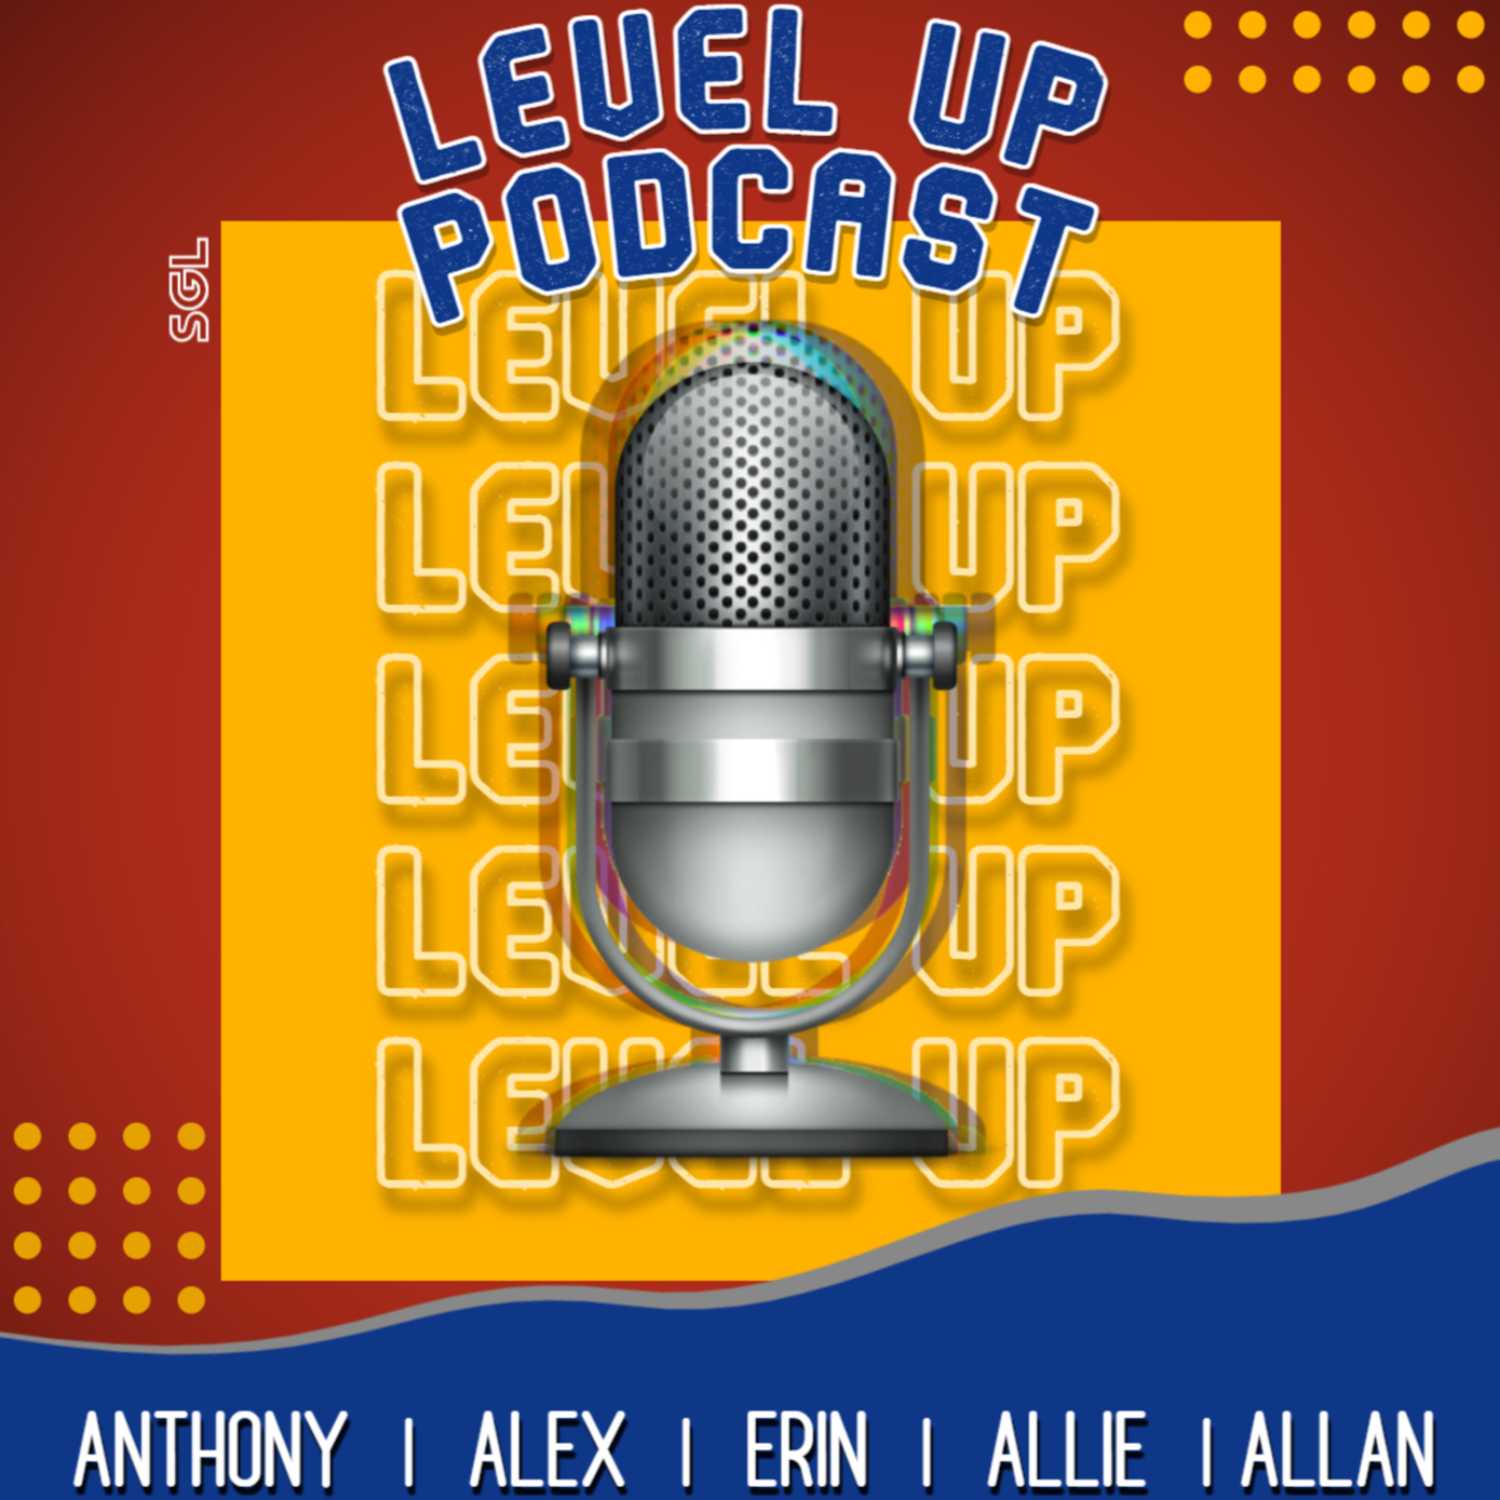 Level Up Podcast